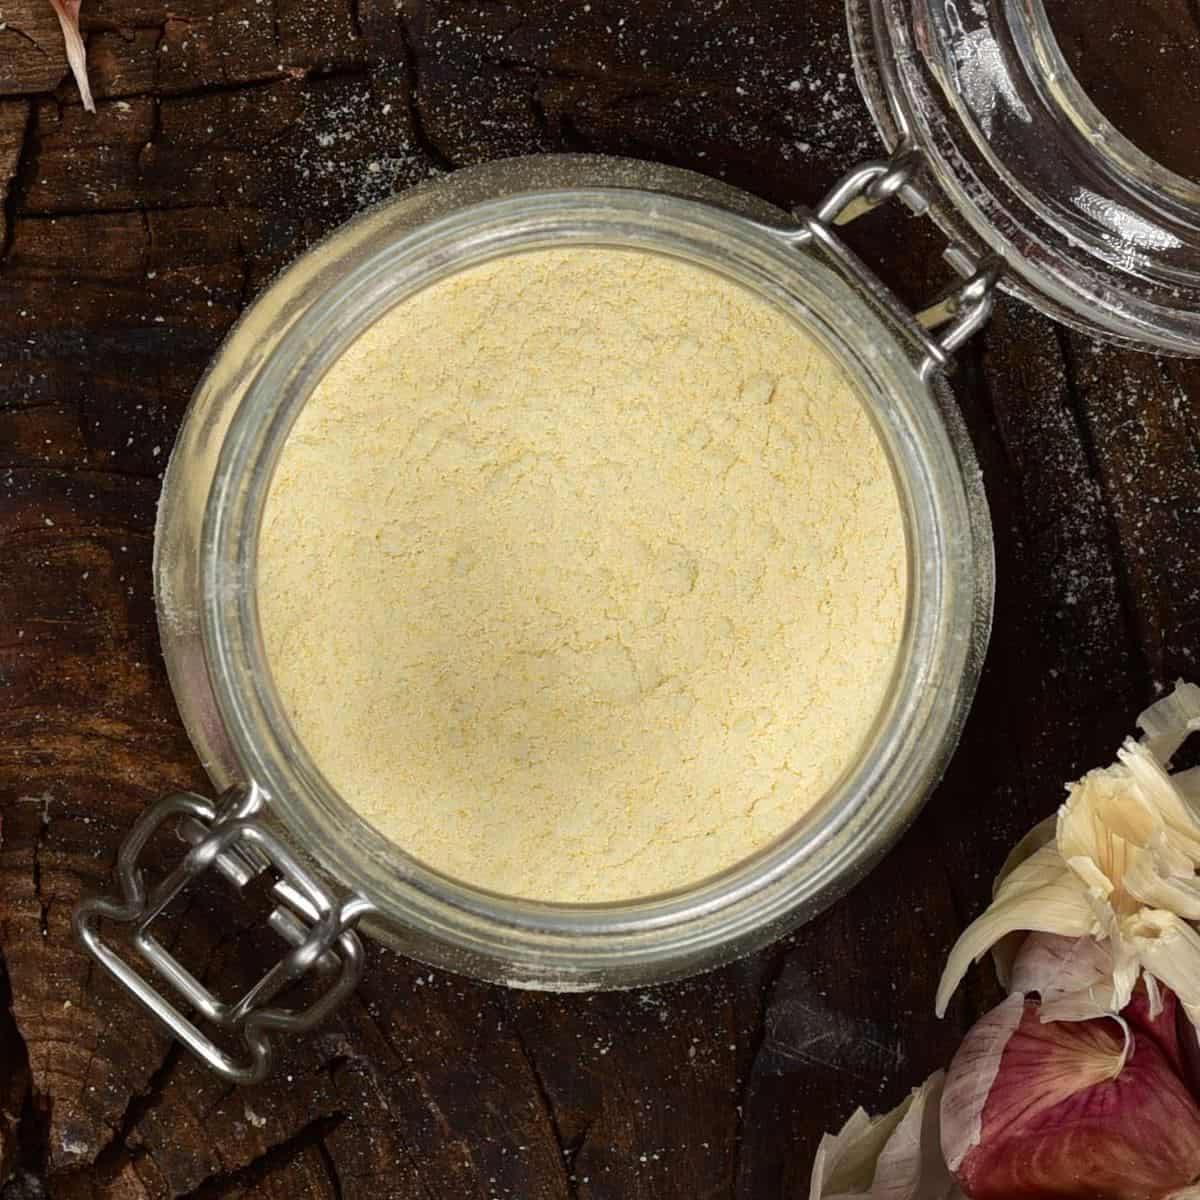 How to Make Homemade Garlic Powder - A Girl Called Adri